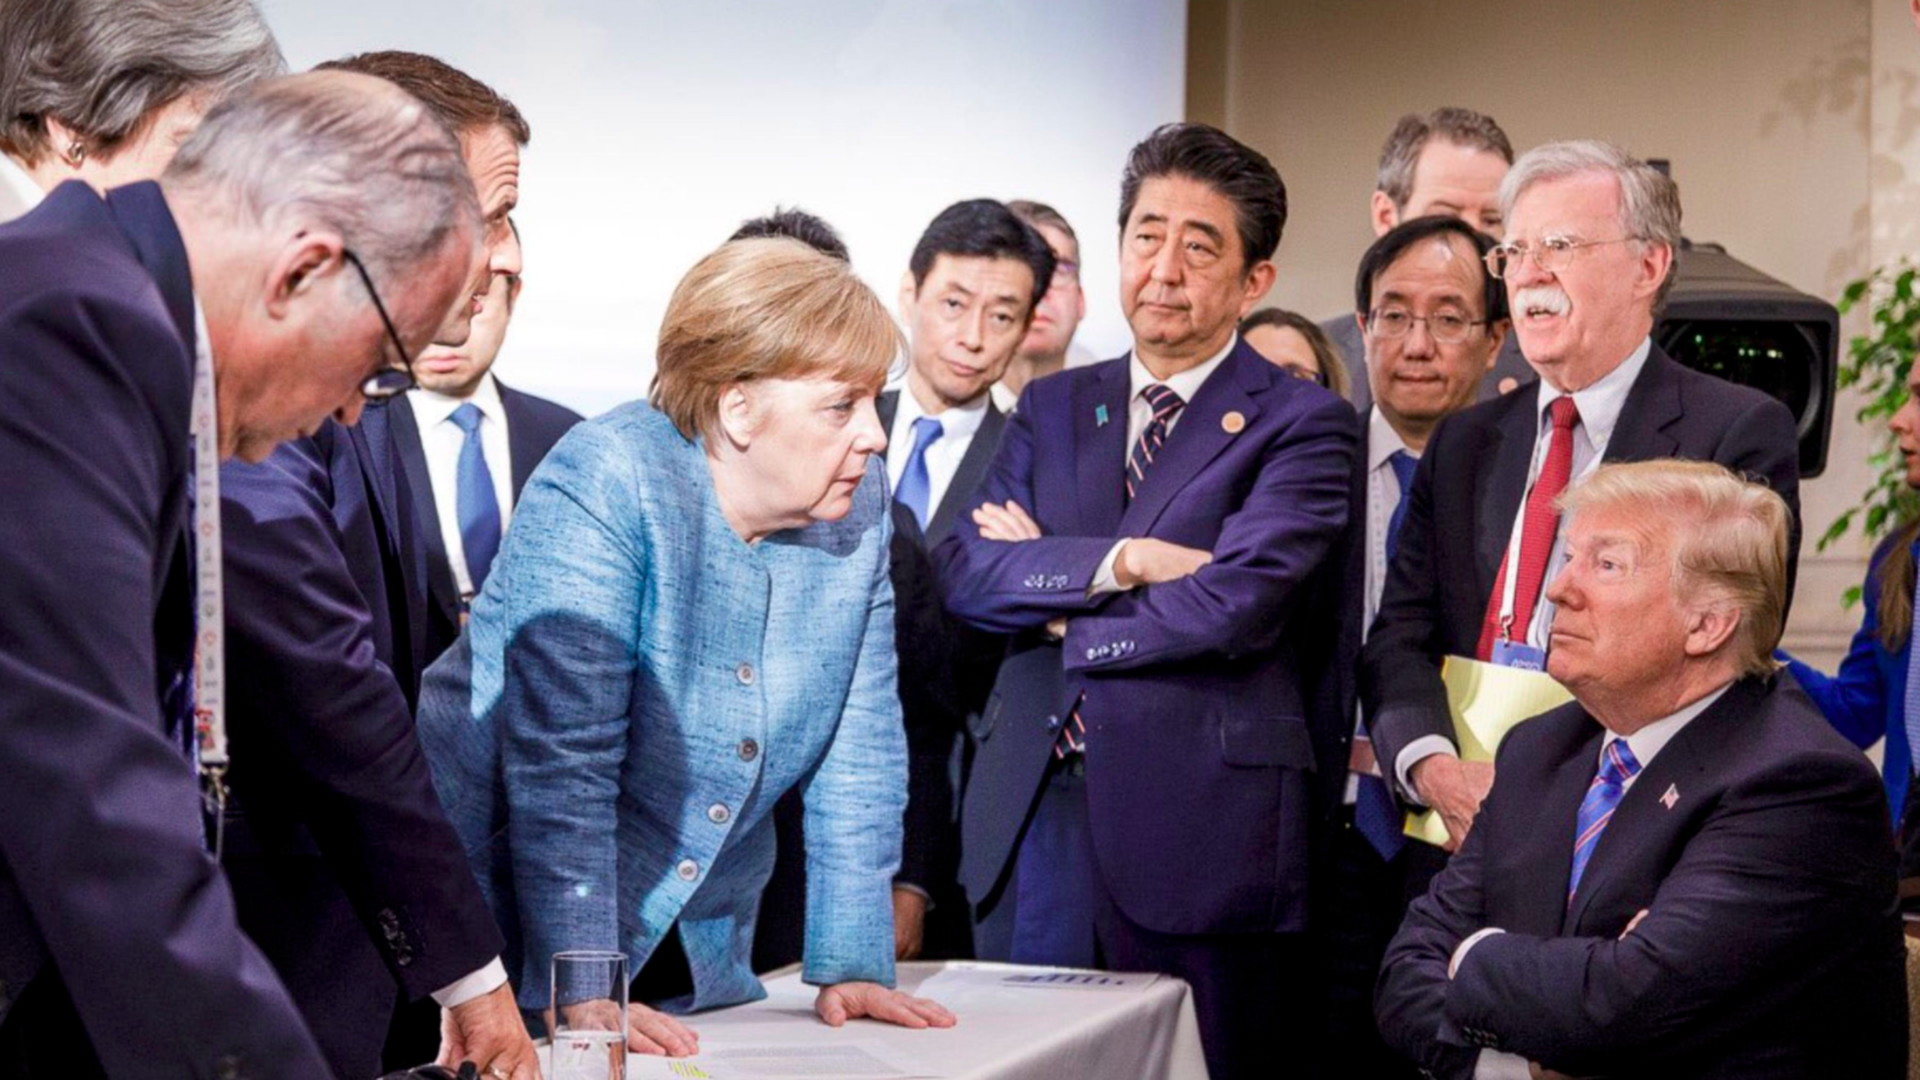 Merkel leans over a sitting Trump